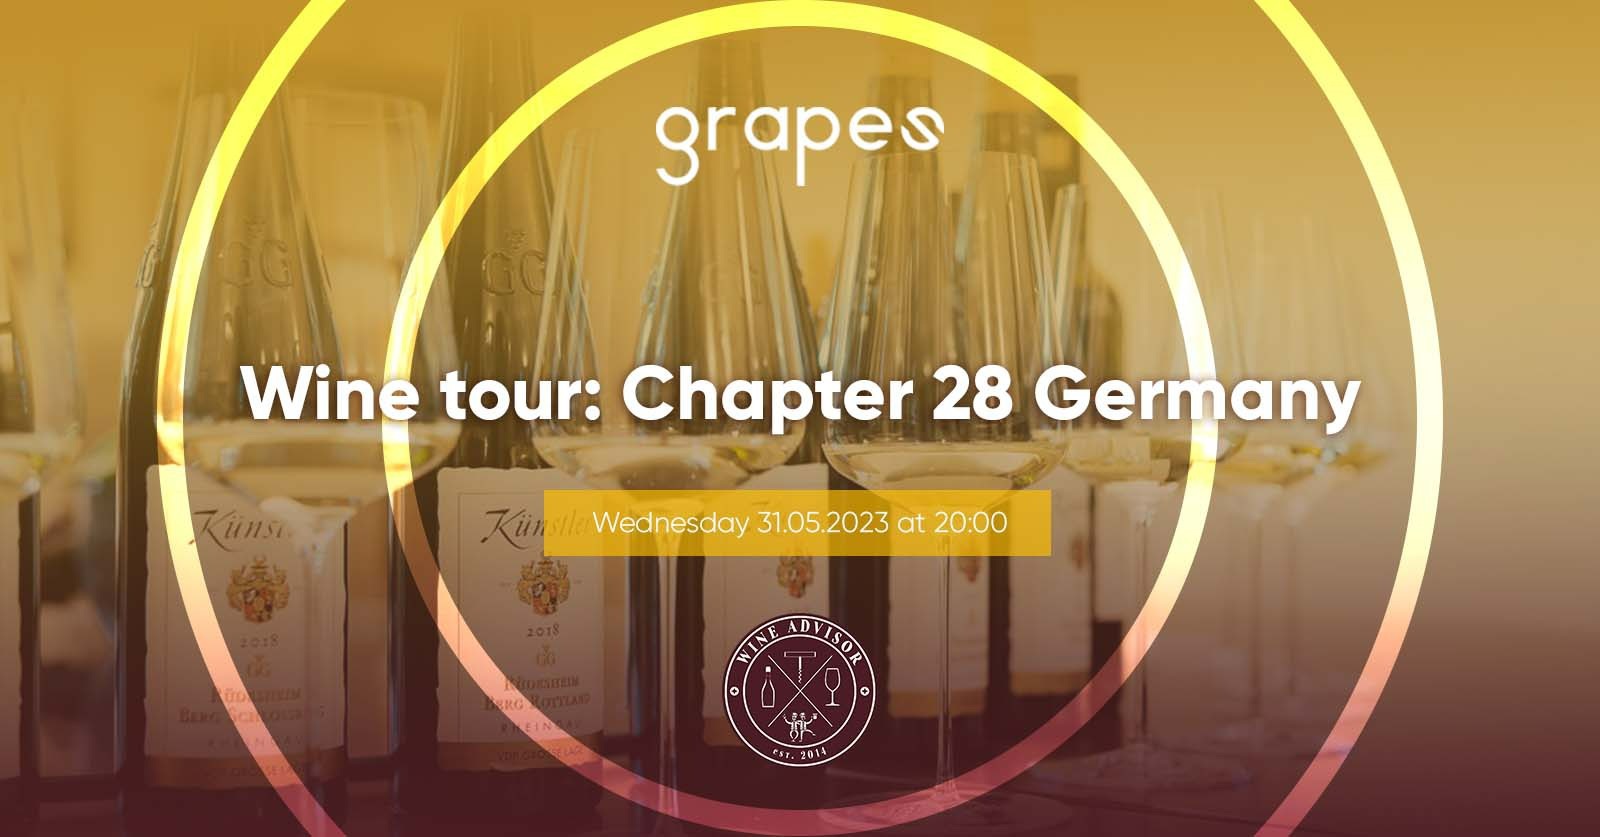 Grapes wine tour | Chapter 28 Germany (Bucuresti)